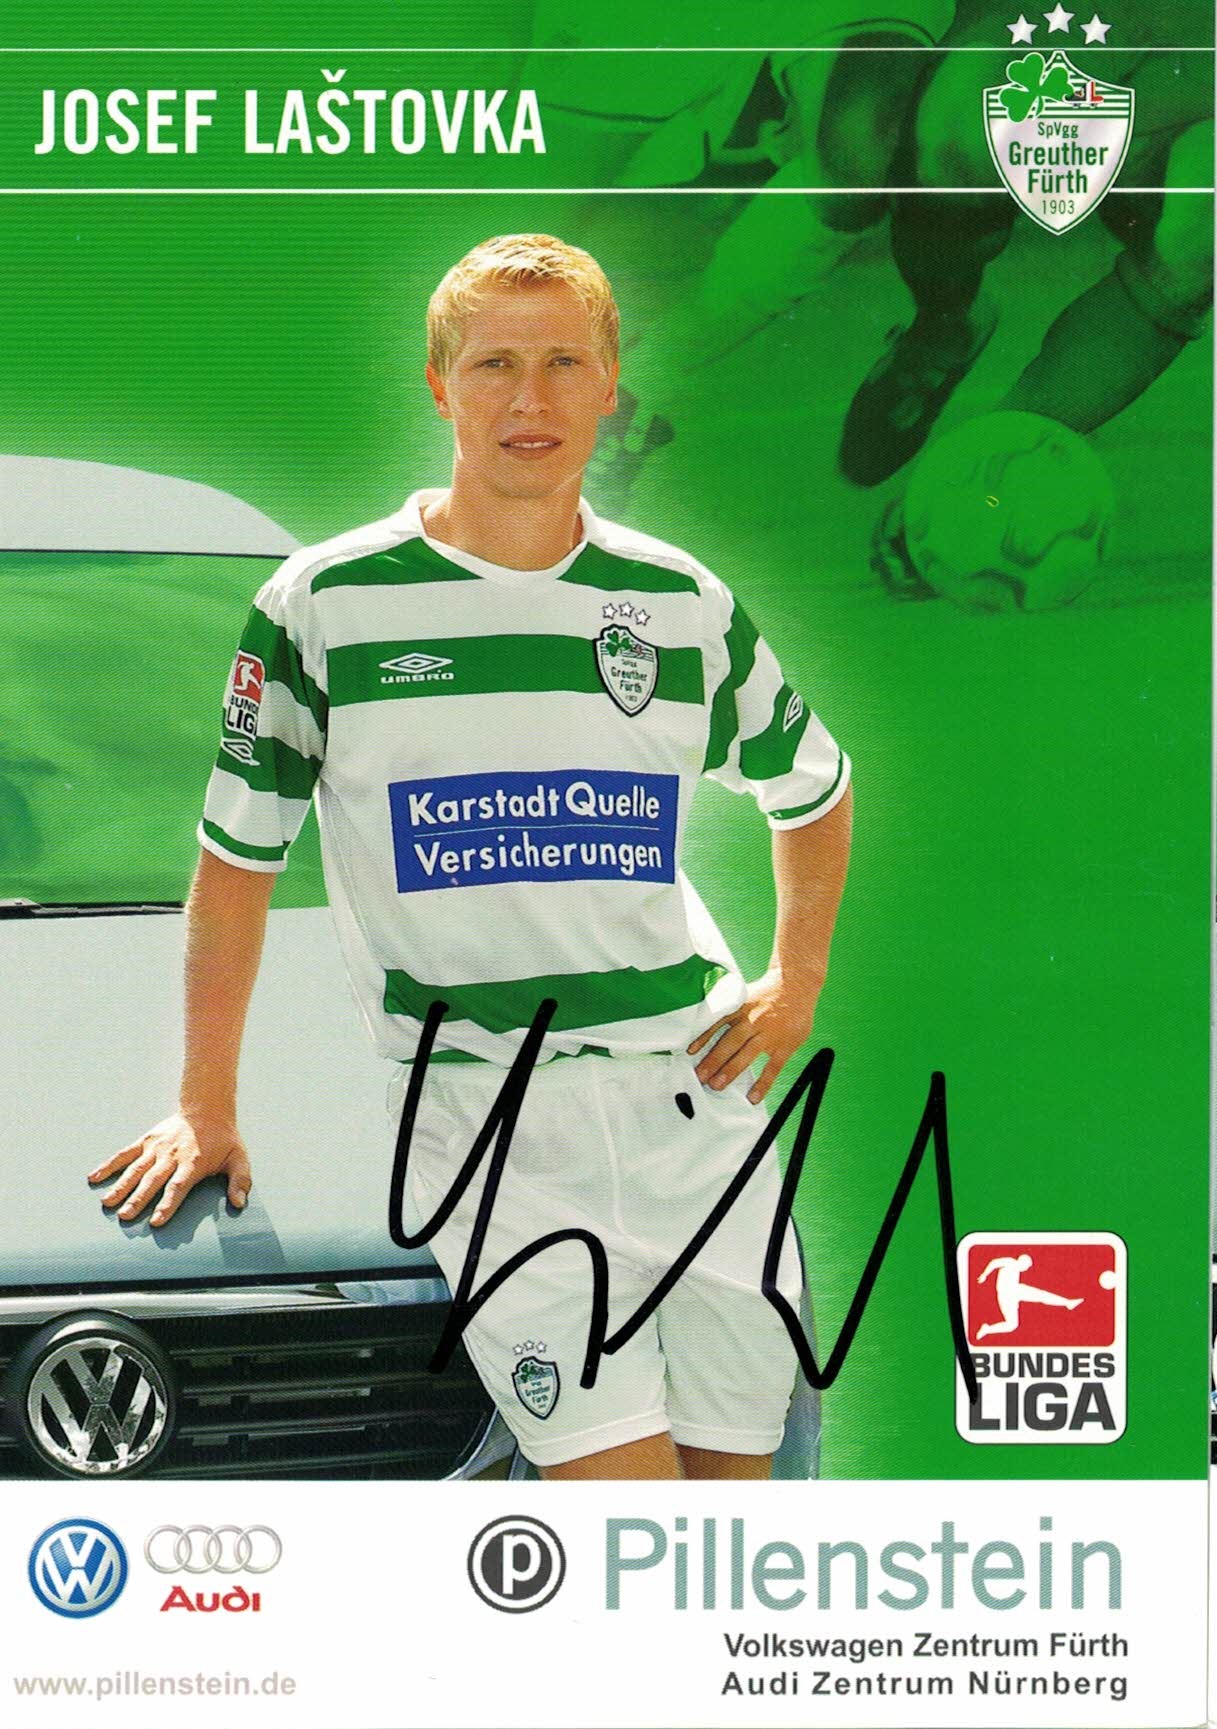 Josef Lastovka Greuther Furth 2005/06 Podpisova karta autogram